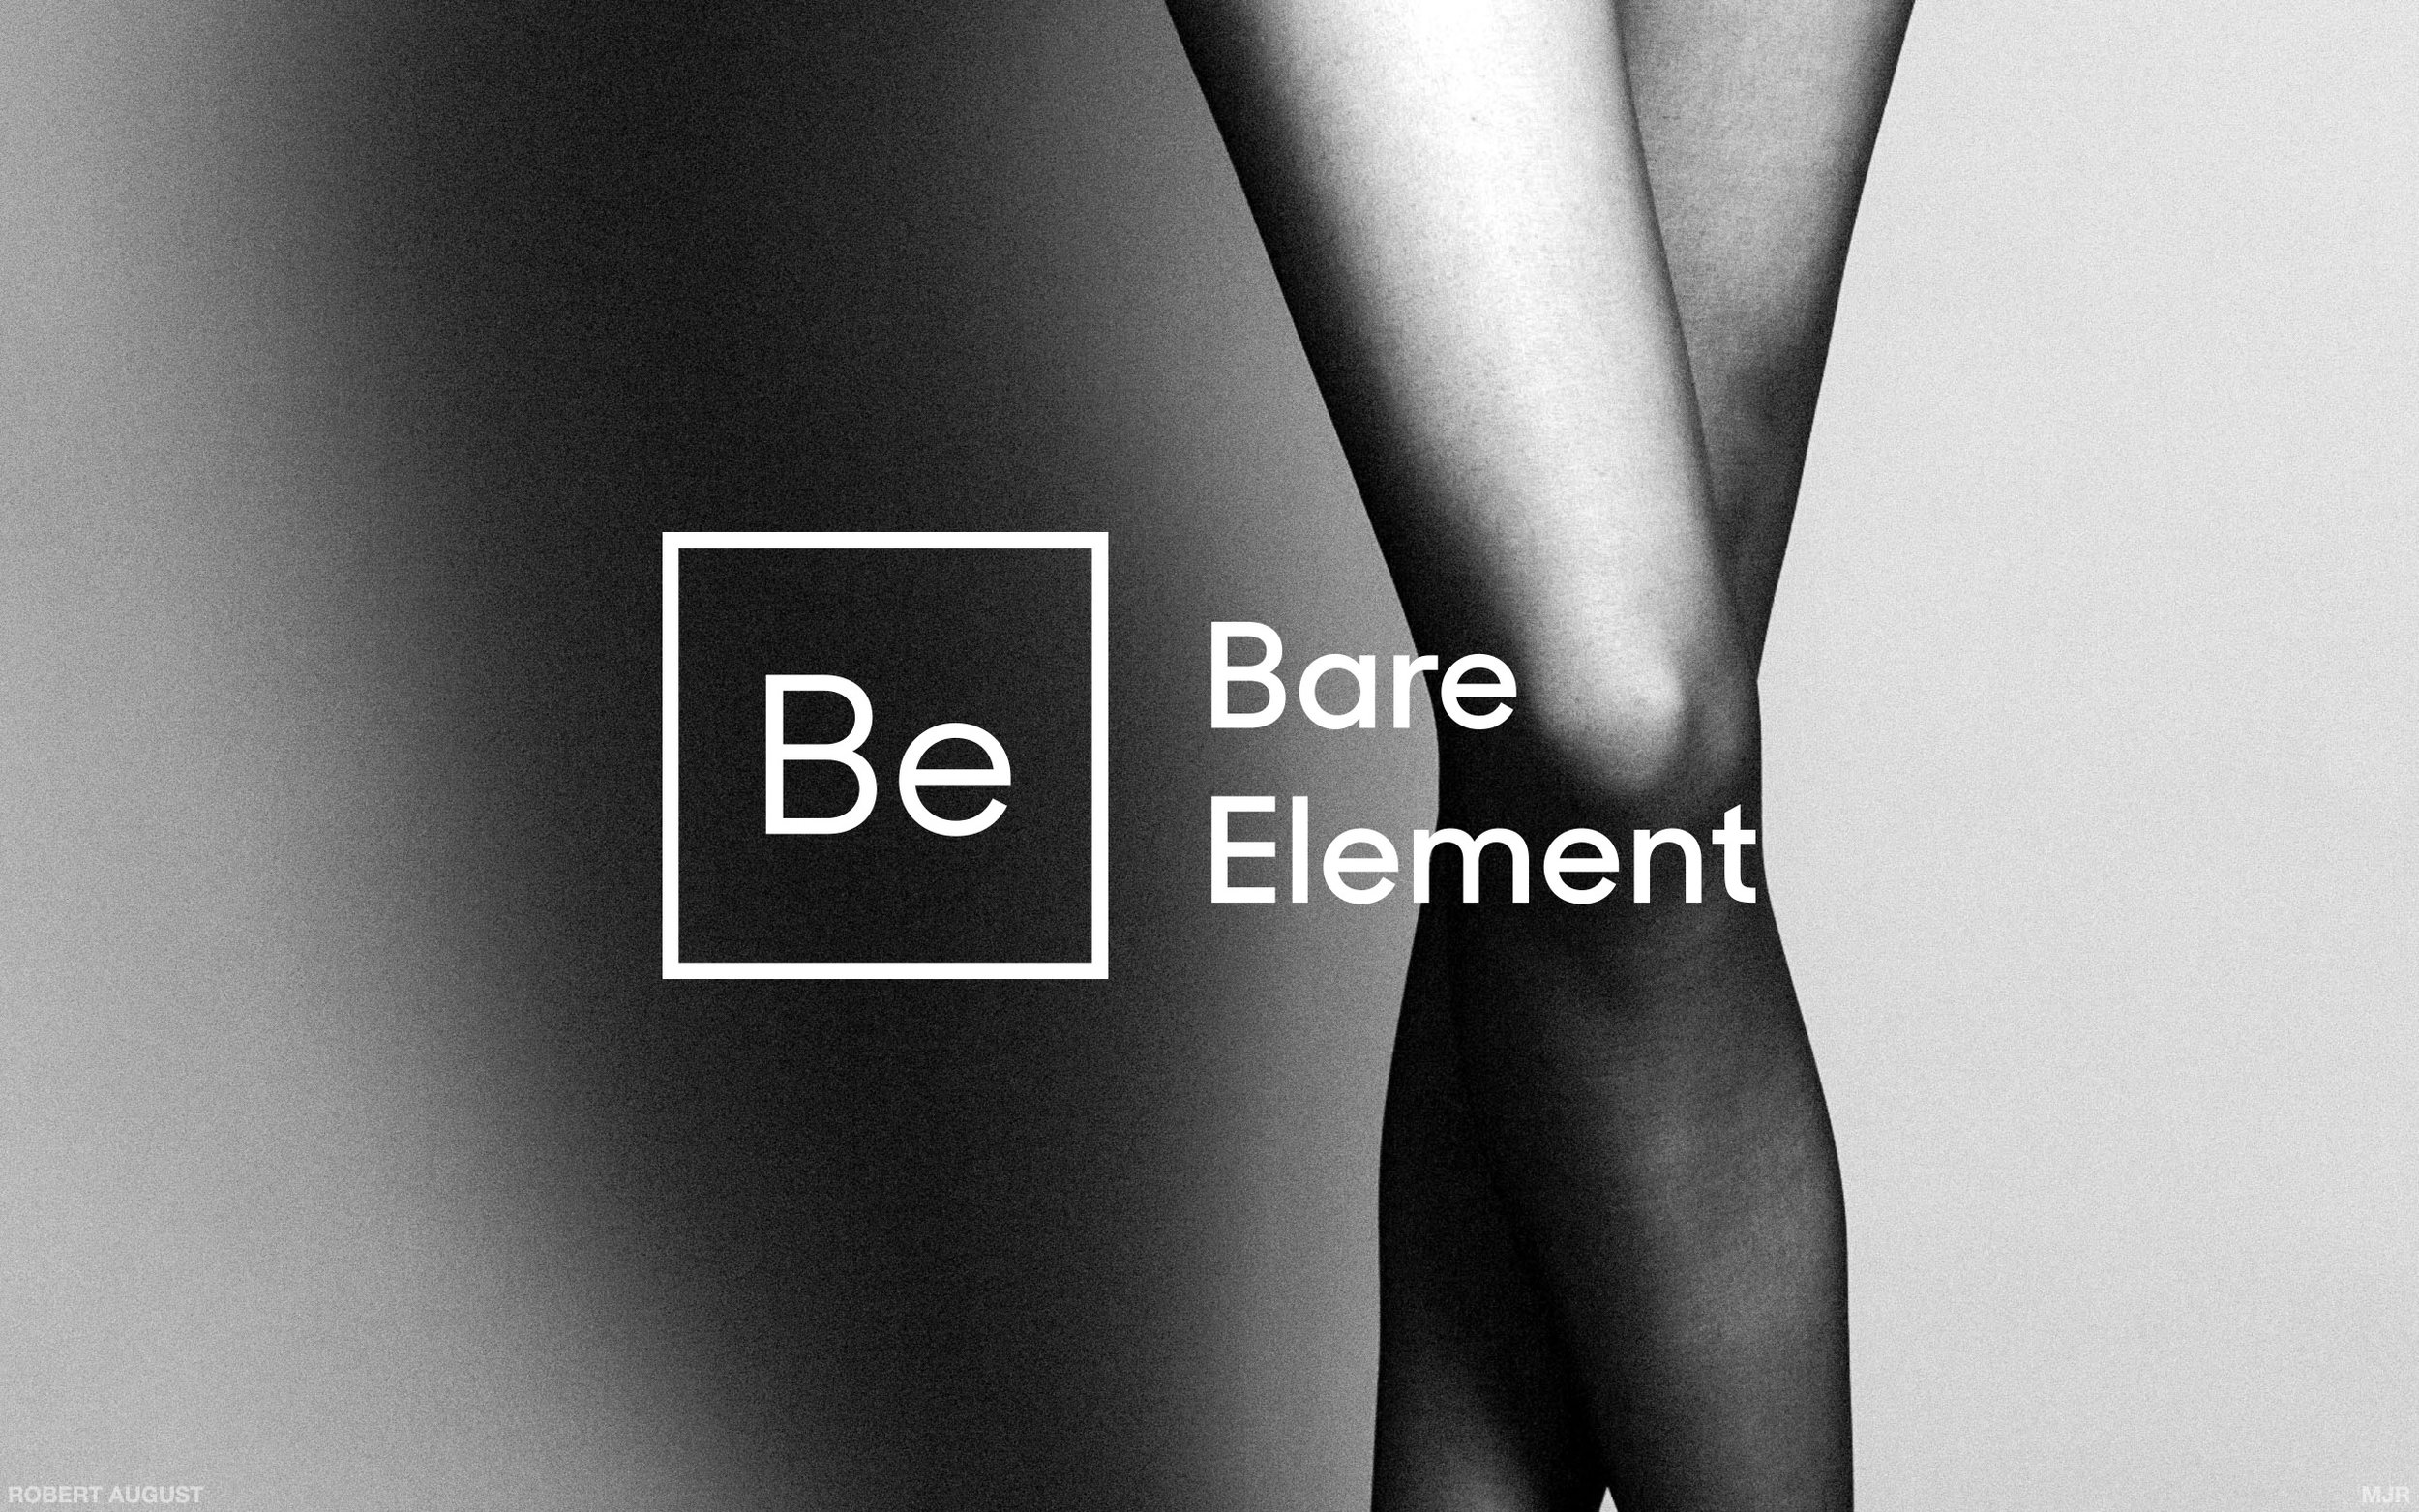 Bare Element